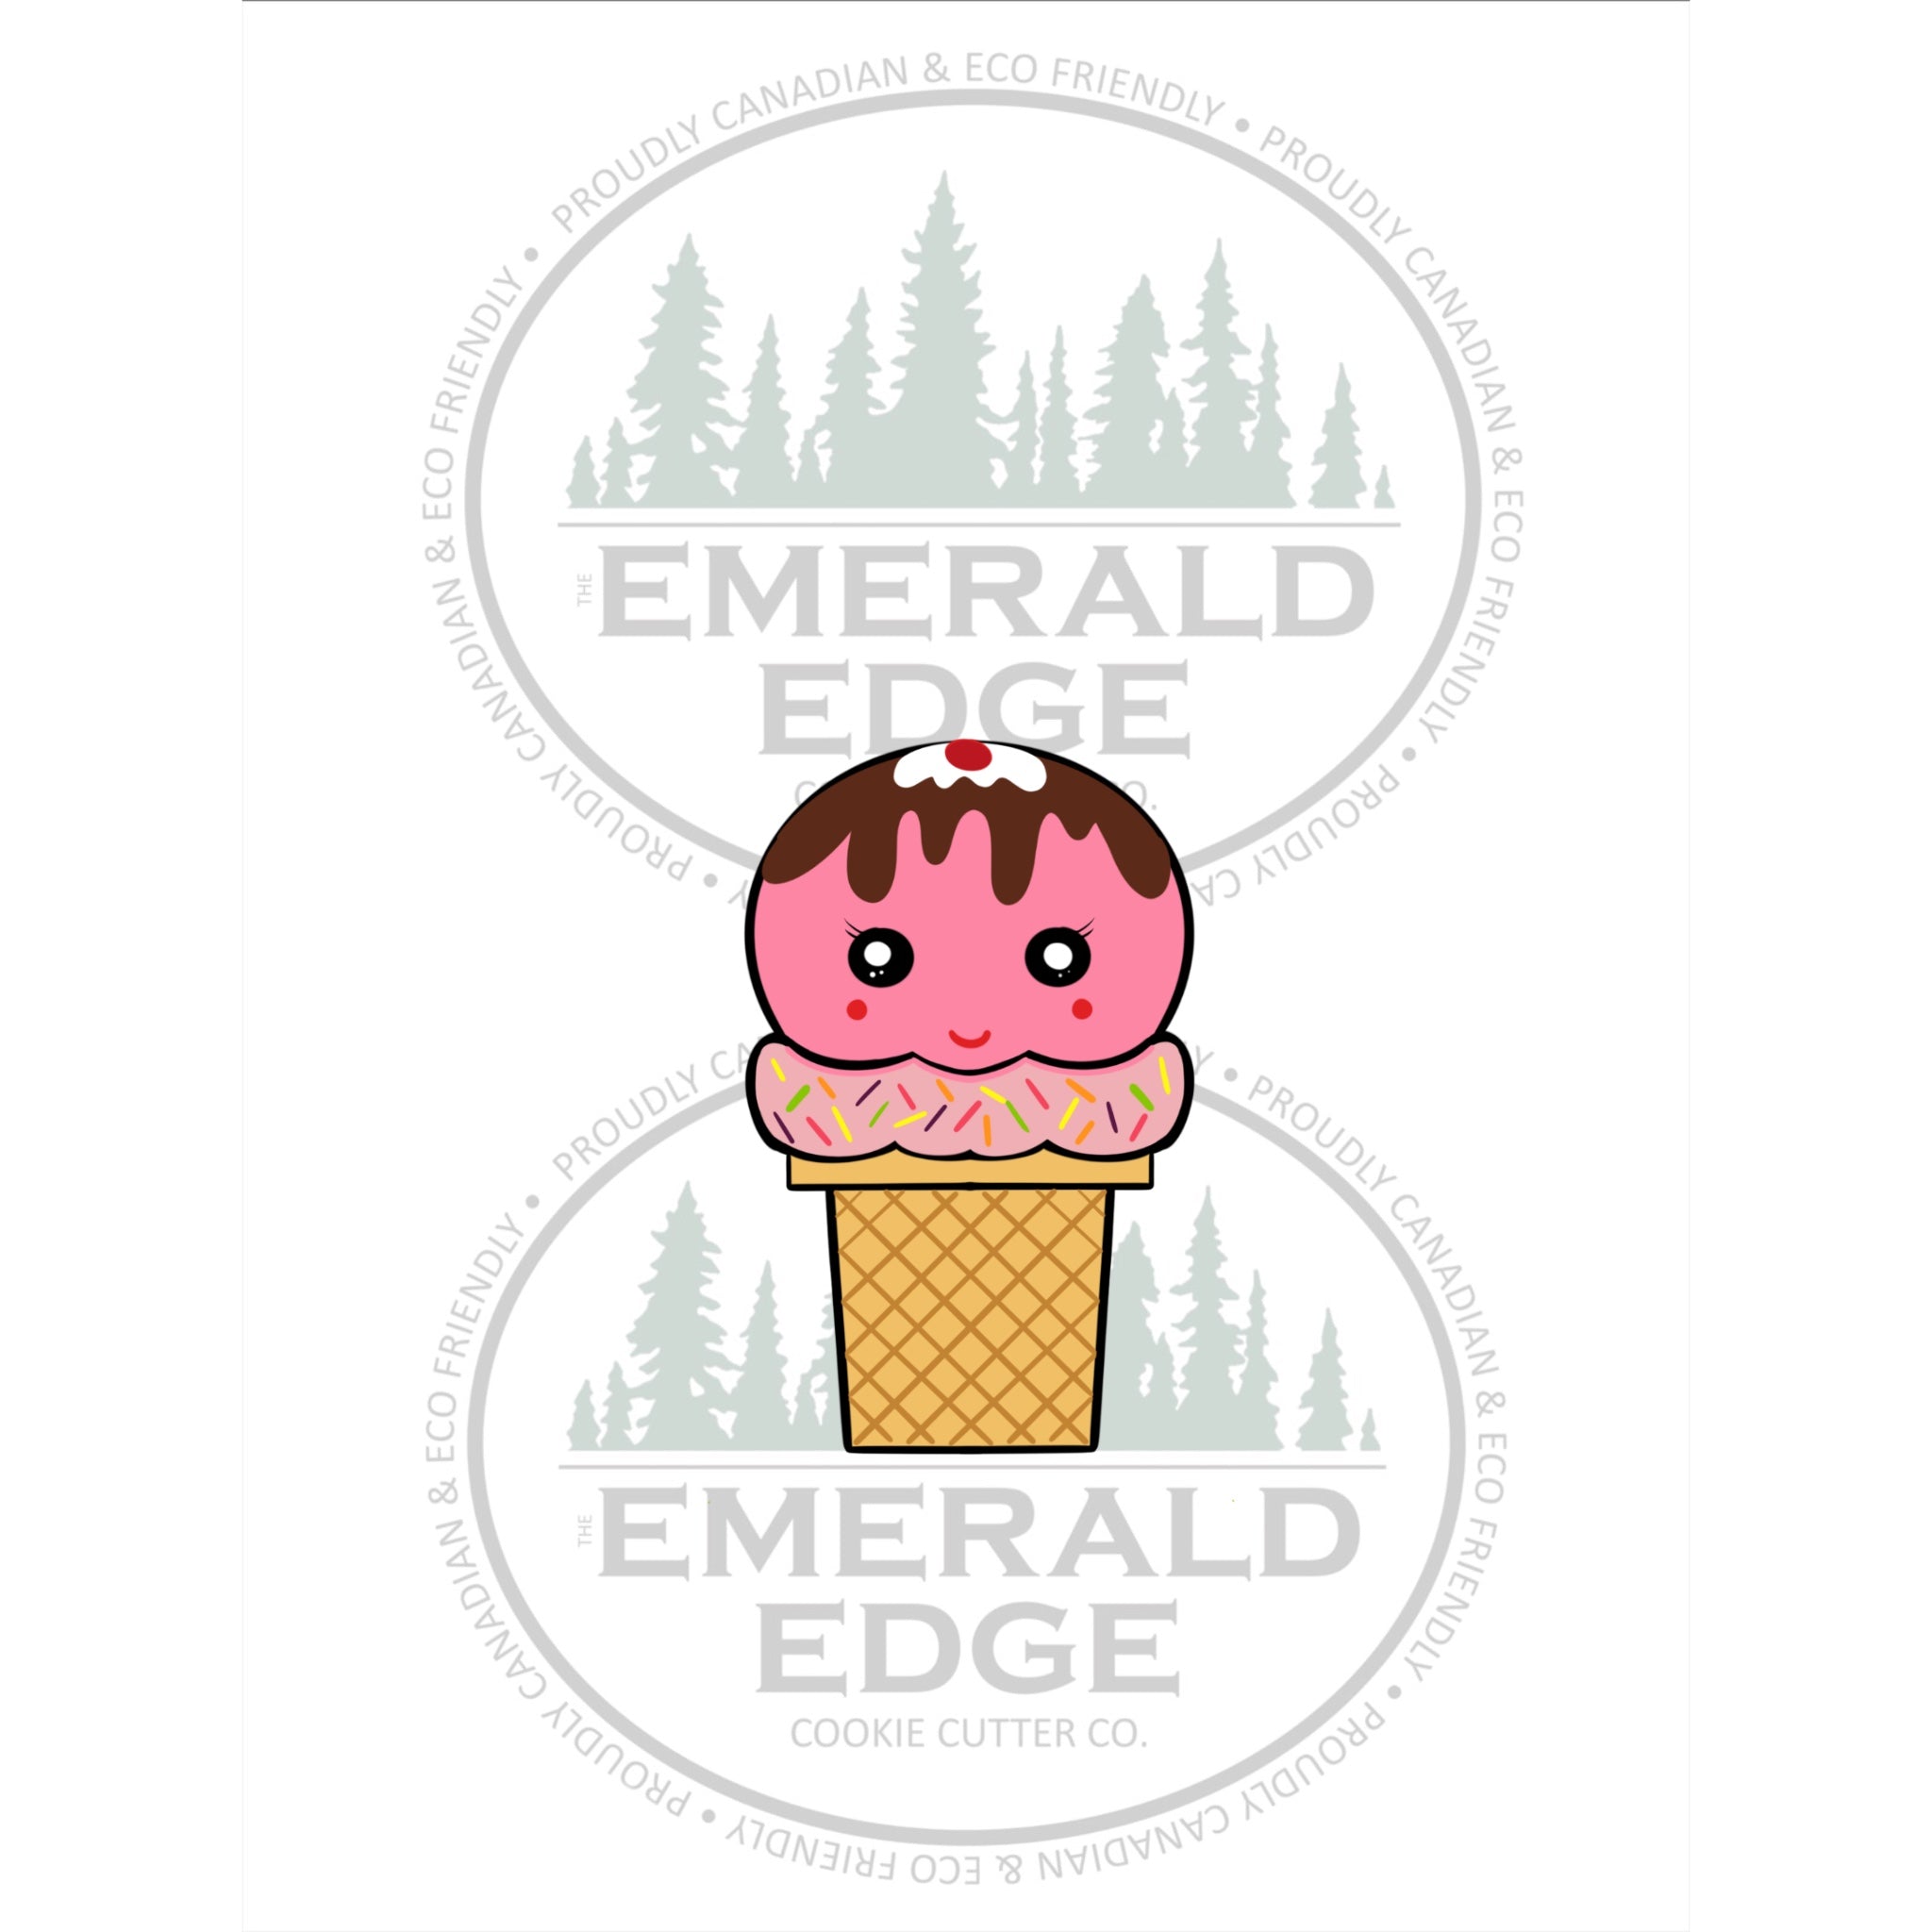 Cute Ice Cream Scoop – The Emerald Edge Cookie Cutter Co.